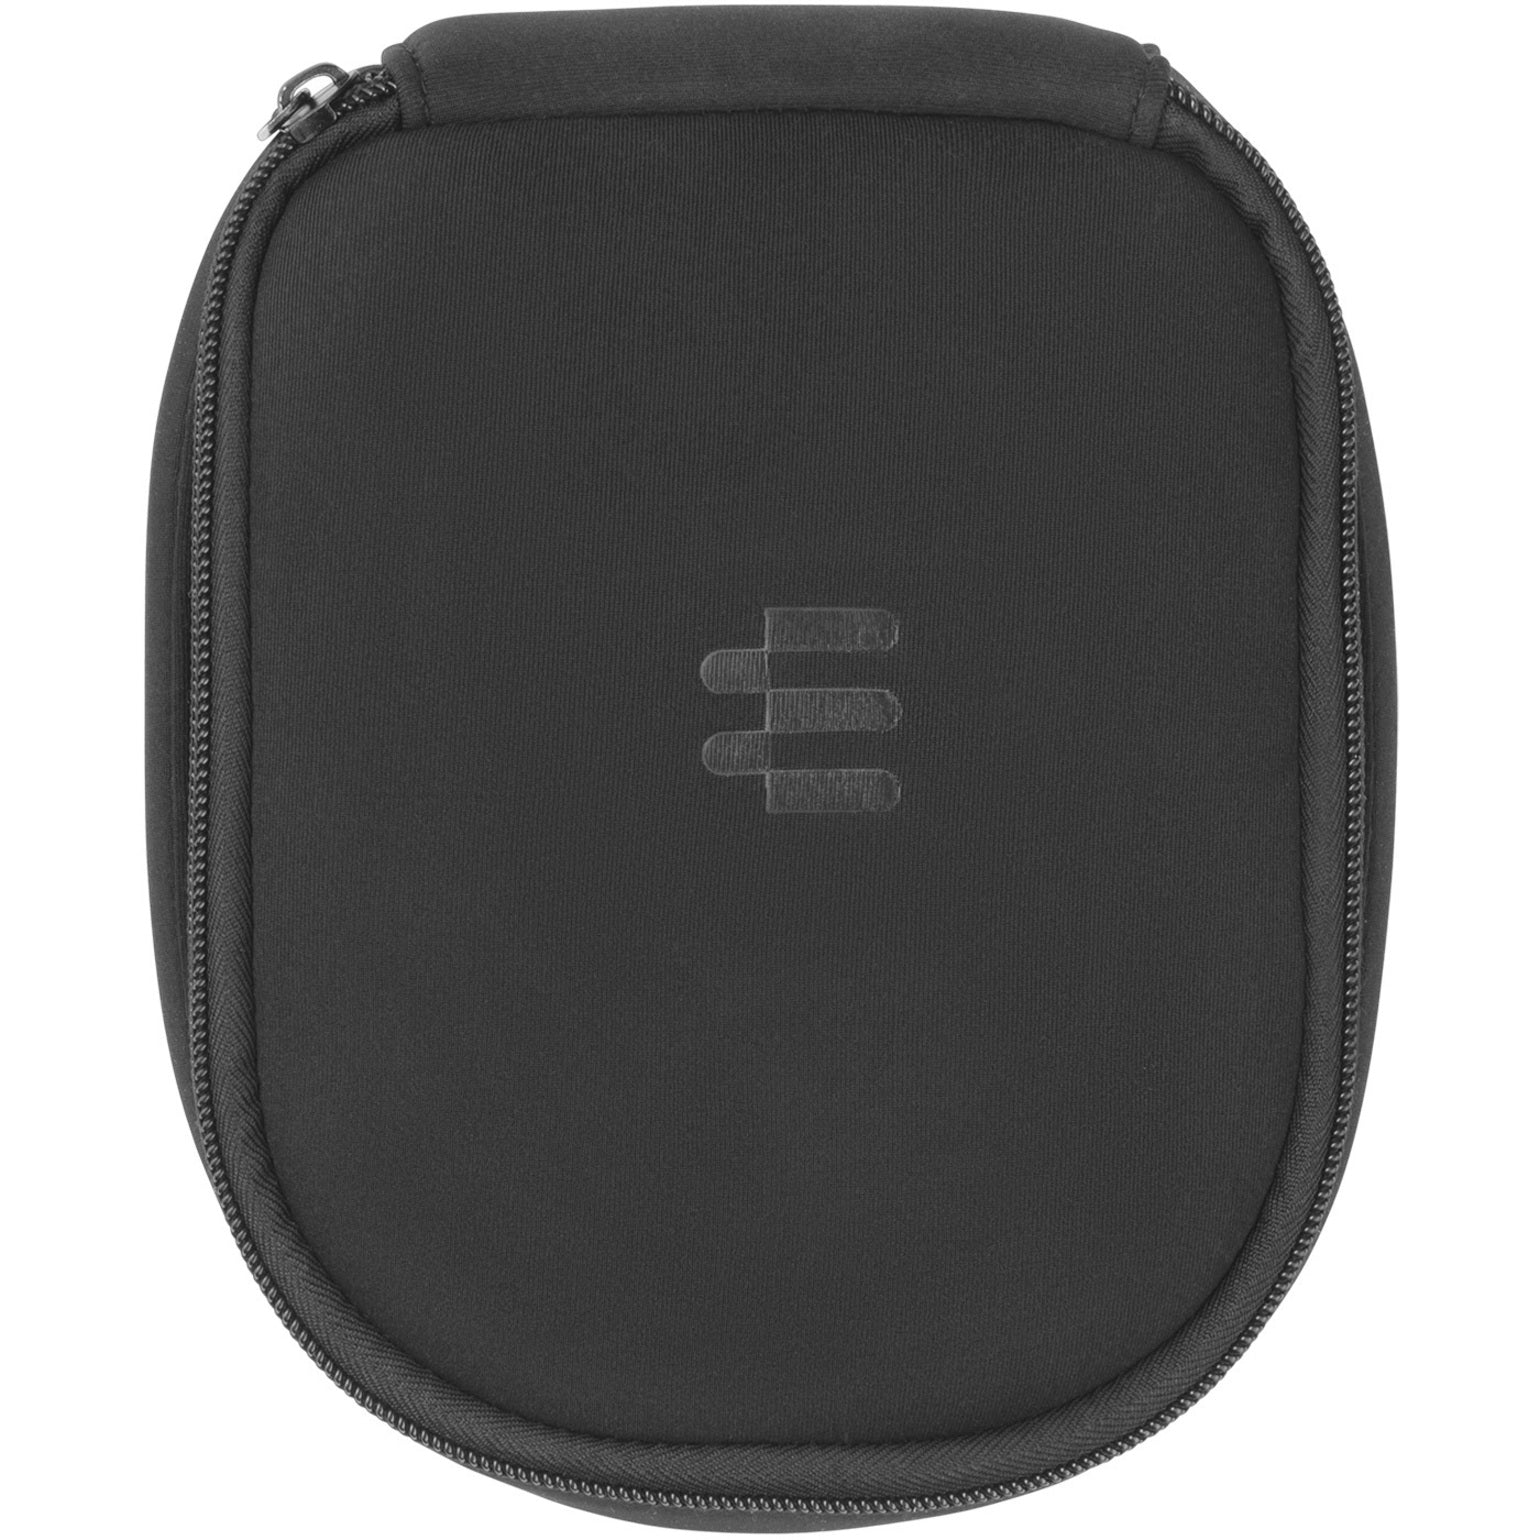 EPOS | SENNHEISER 1000981 IMPACT SDW 5061 - US Headset, Wireless DECT Stereo Headset with Robust Design